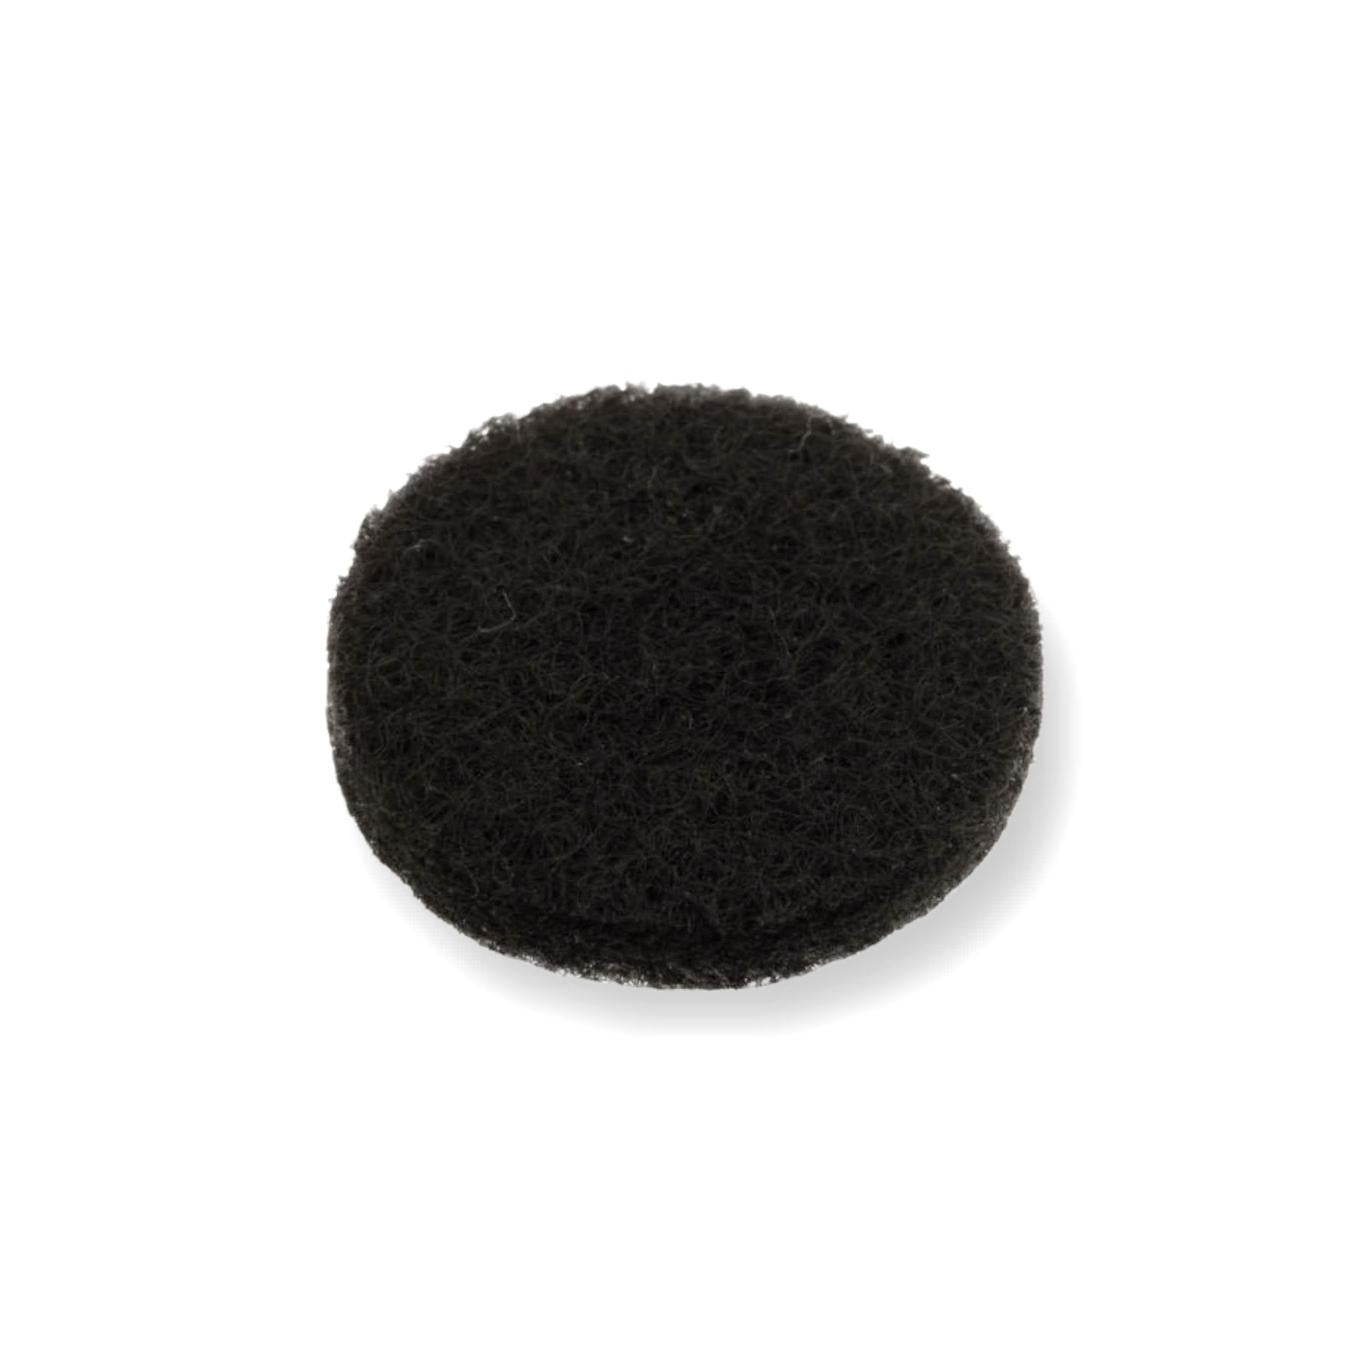 Felt Pads - Dark Brown Self Adhesive Stick on Felt - Round 42mm Diameter - Made in Germany